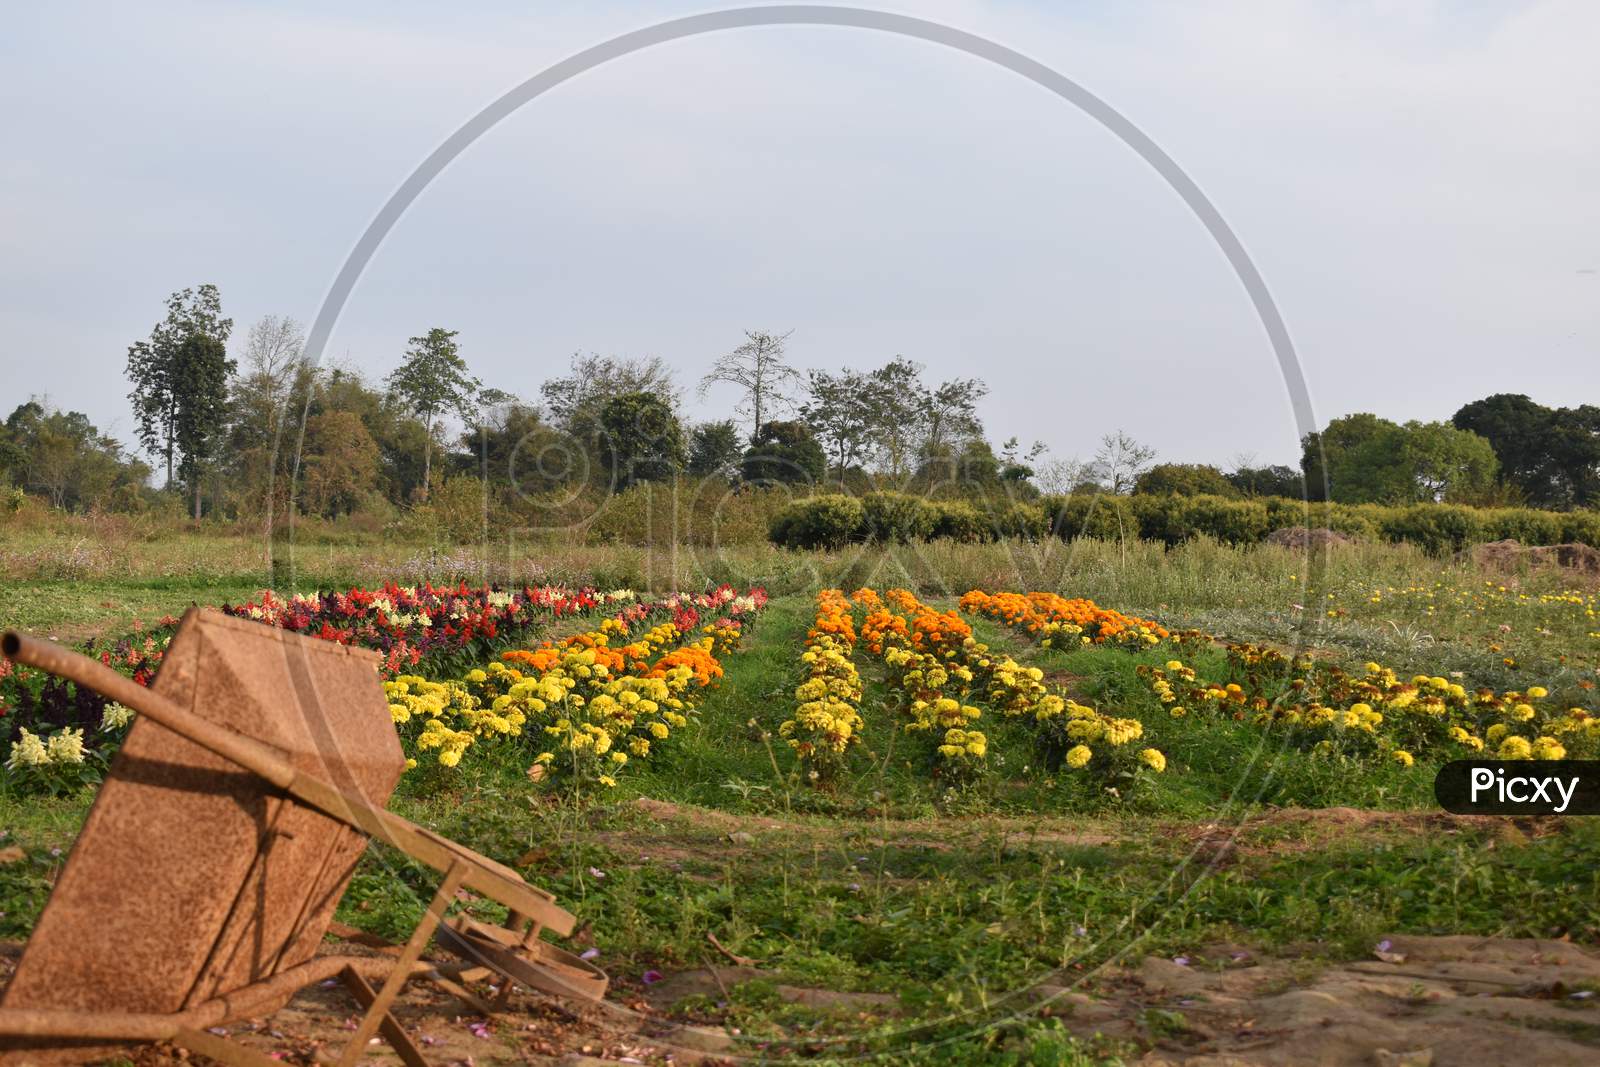 a garden pull cart is lying near the flower cultivation field